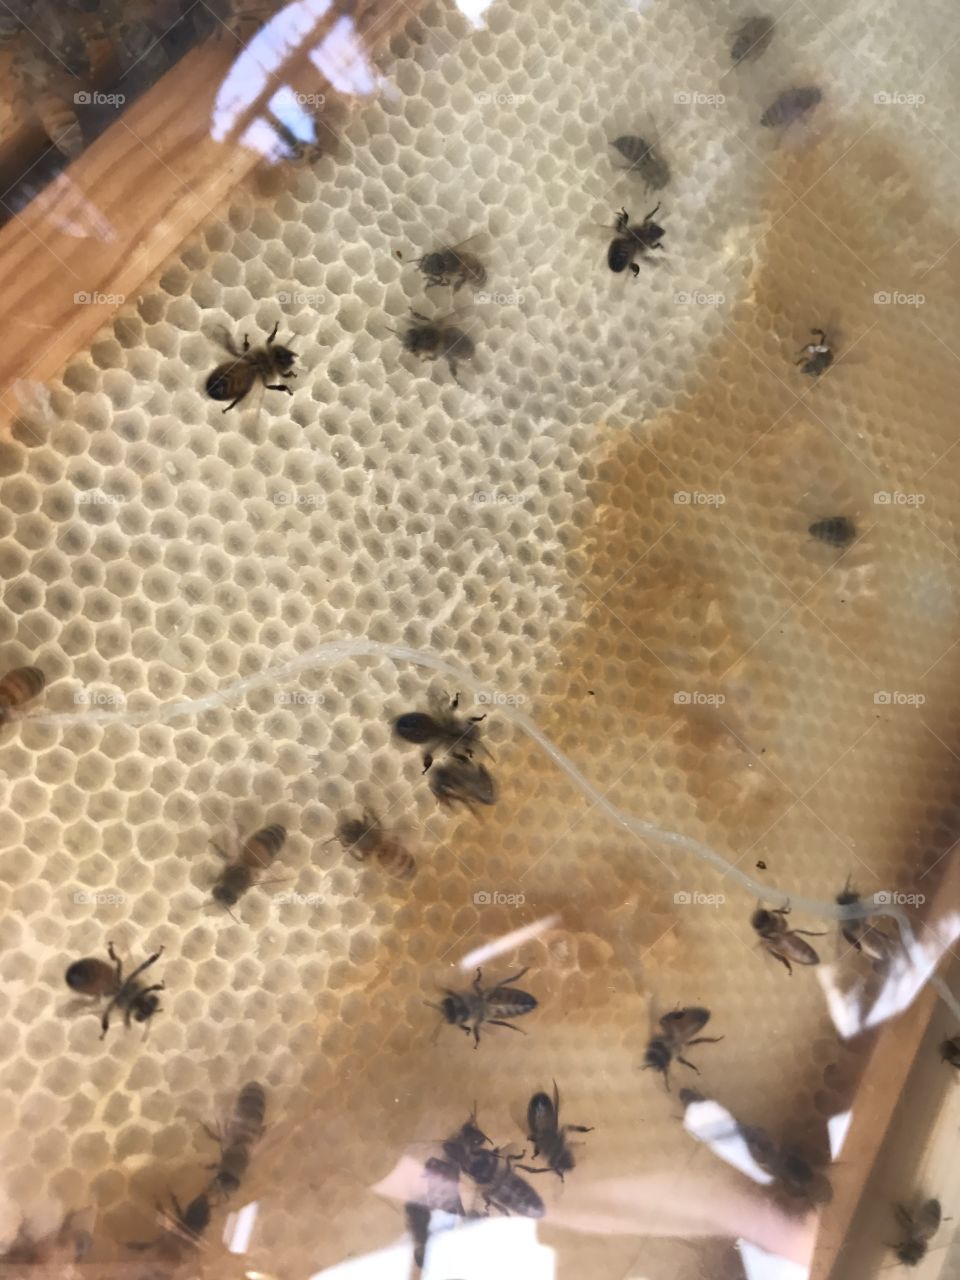 Honey bees! 